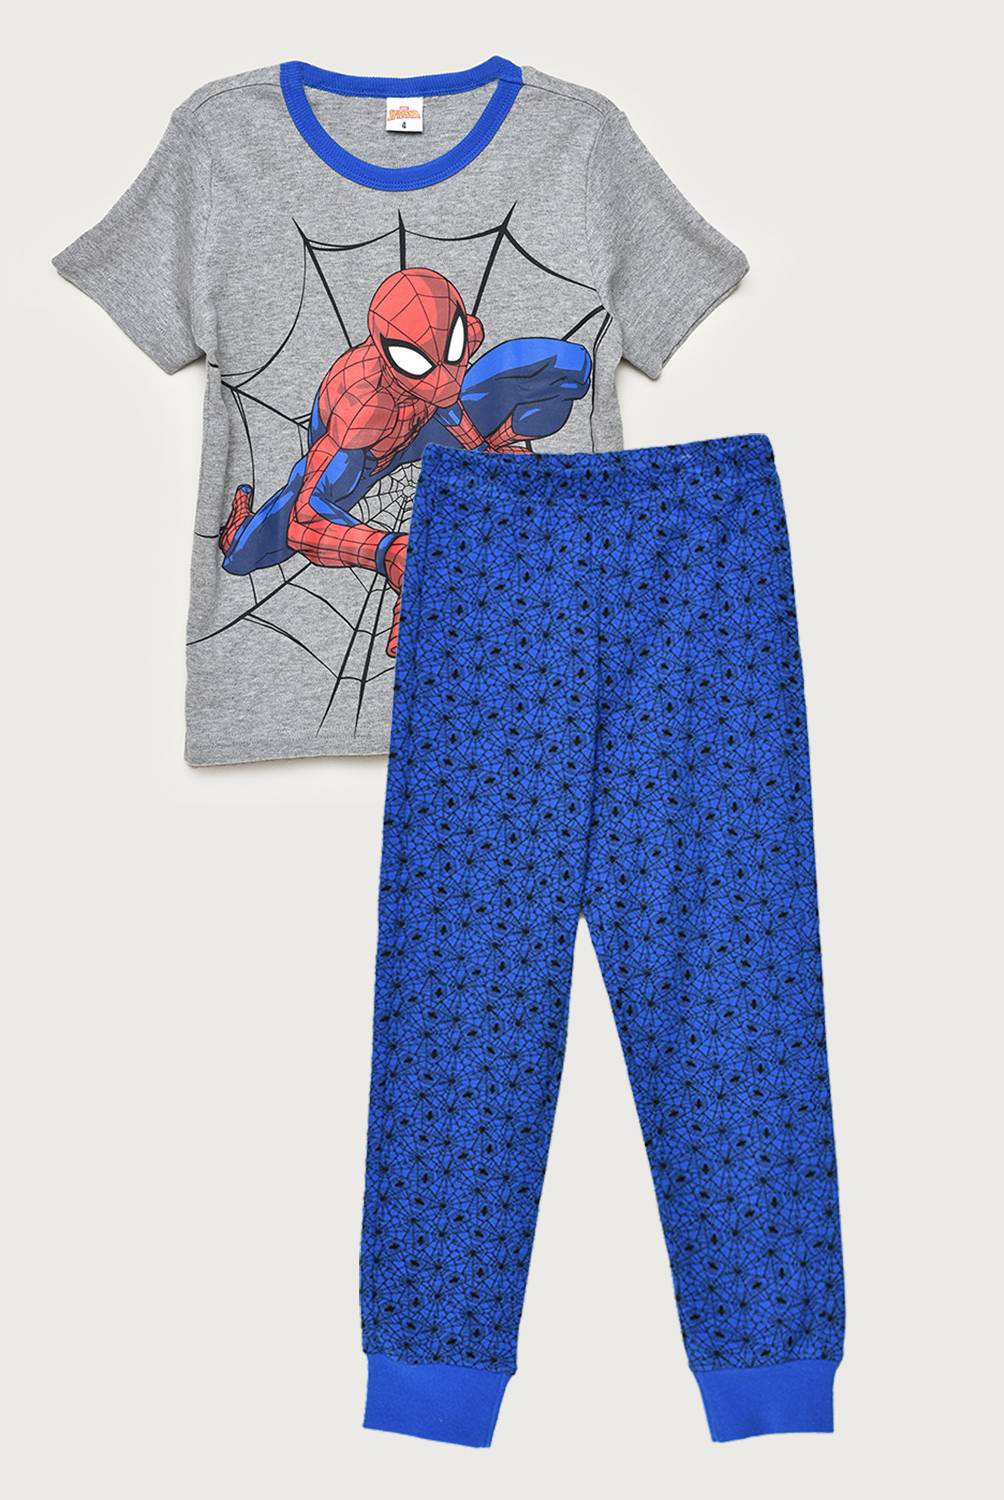 SPIDERMAN - Pijama Polo Manga Corta Y Pantalon